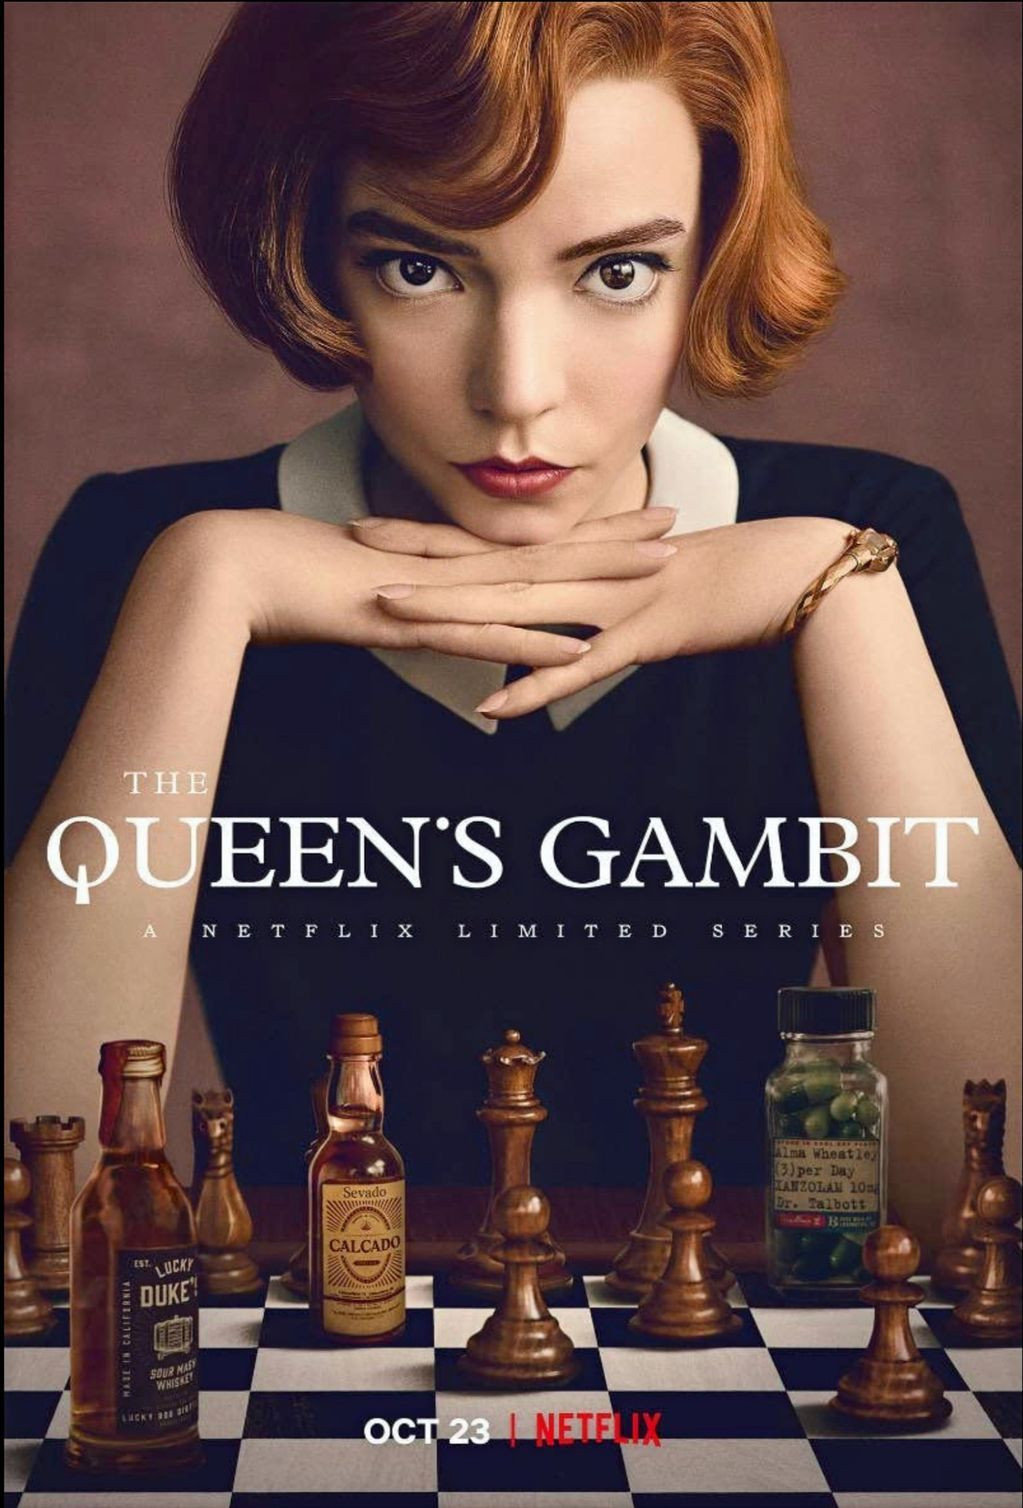 Netflix dizisi The Queen's Gambit 'en popüler' oldu - Sayfa 2